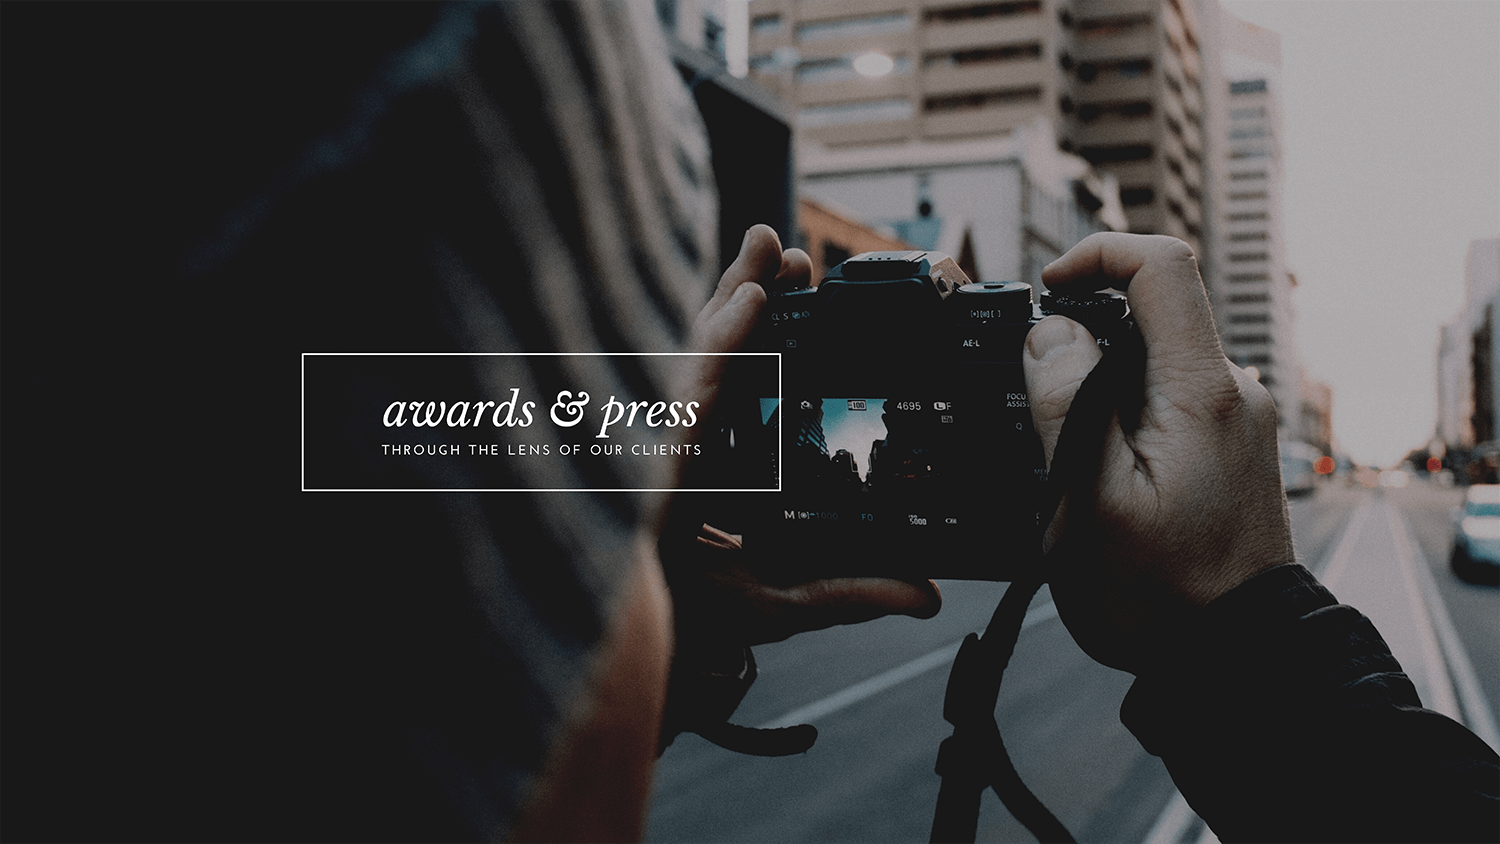 Awards & Press